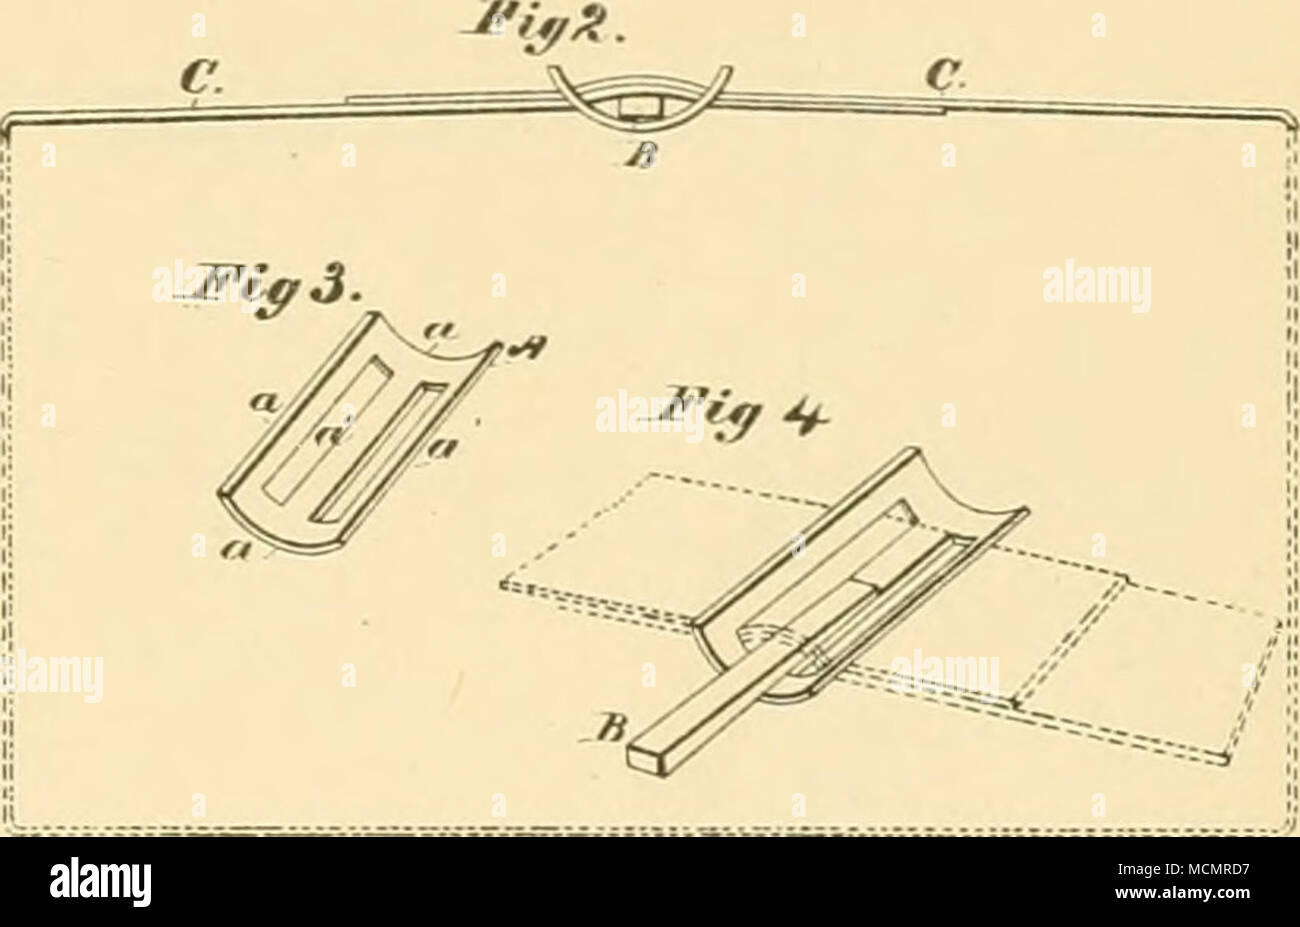 . A. J. NELLIS. Cotton-Bale Ties. E. H. STAFFORD. Cotton-Bale Ties Patentid April 21,1874. Palenltd April 21. 1B74 -y^ Stock Photo